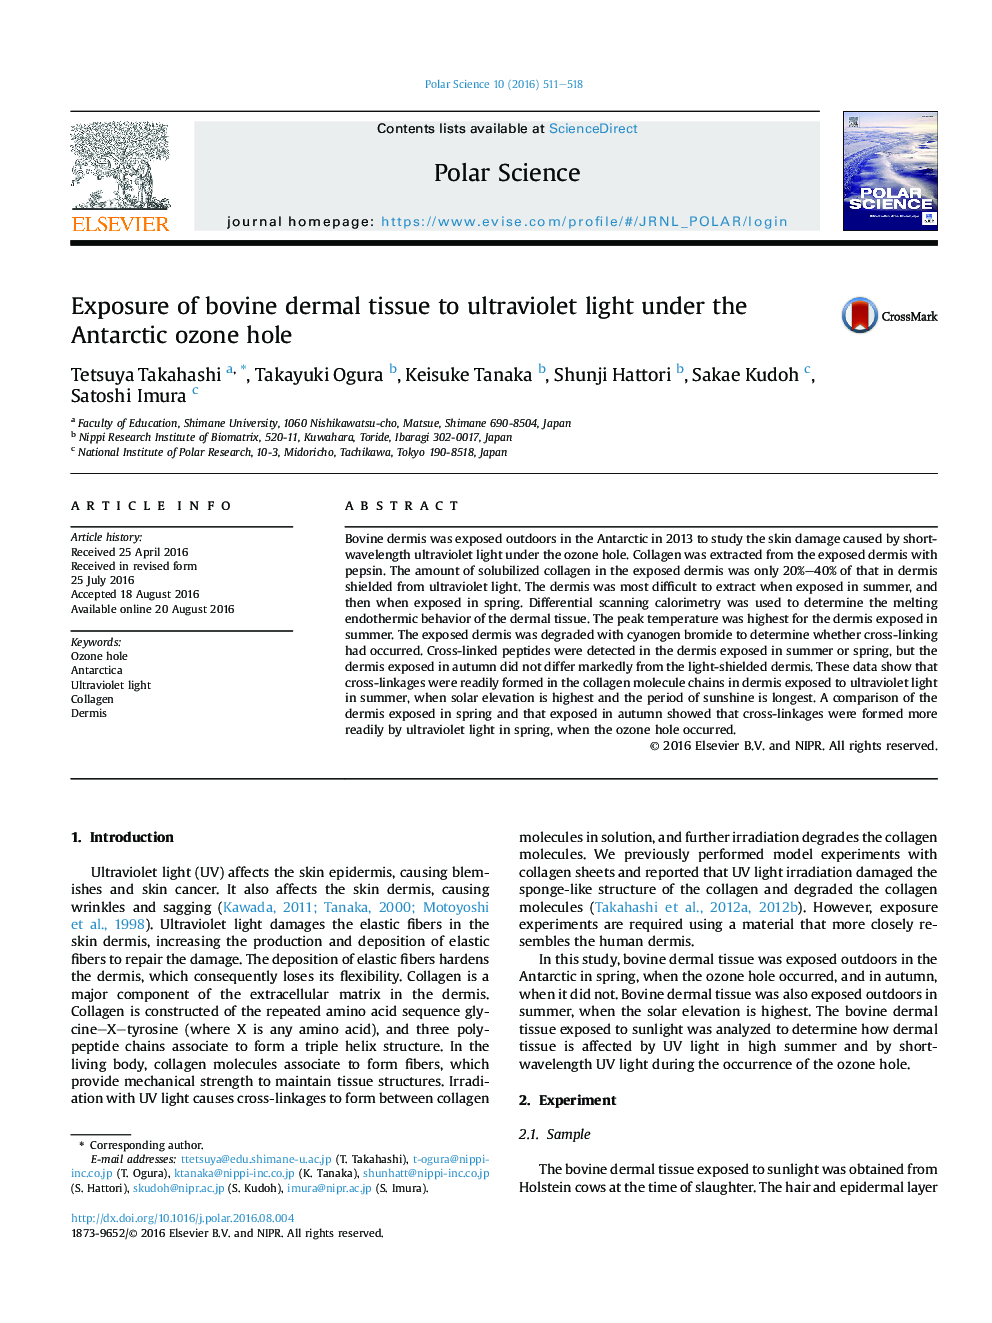 Exposure of bovine dermal tissue to ultraviolet light under the Antarctic ozone hole